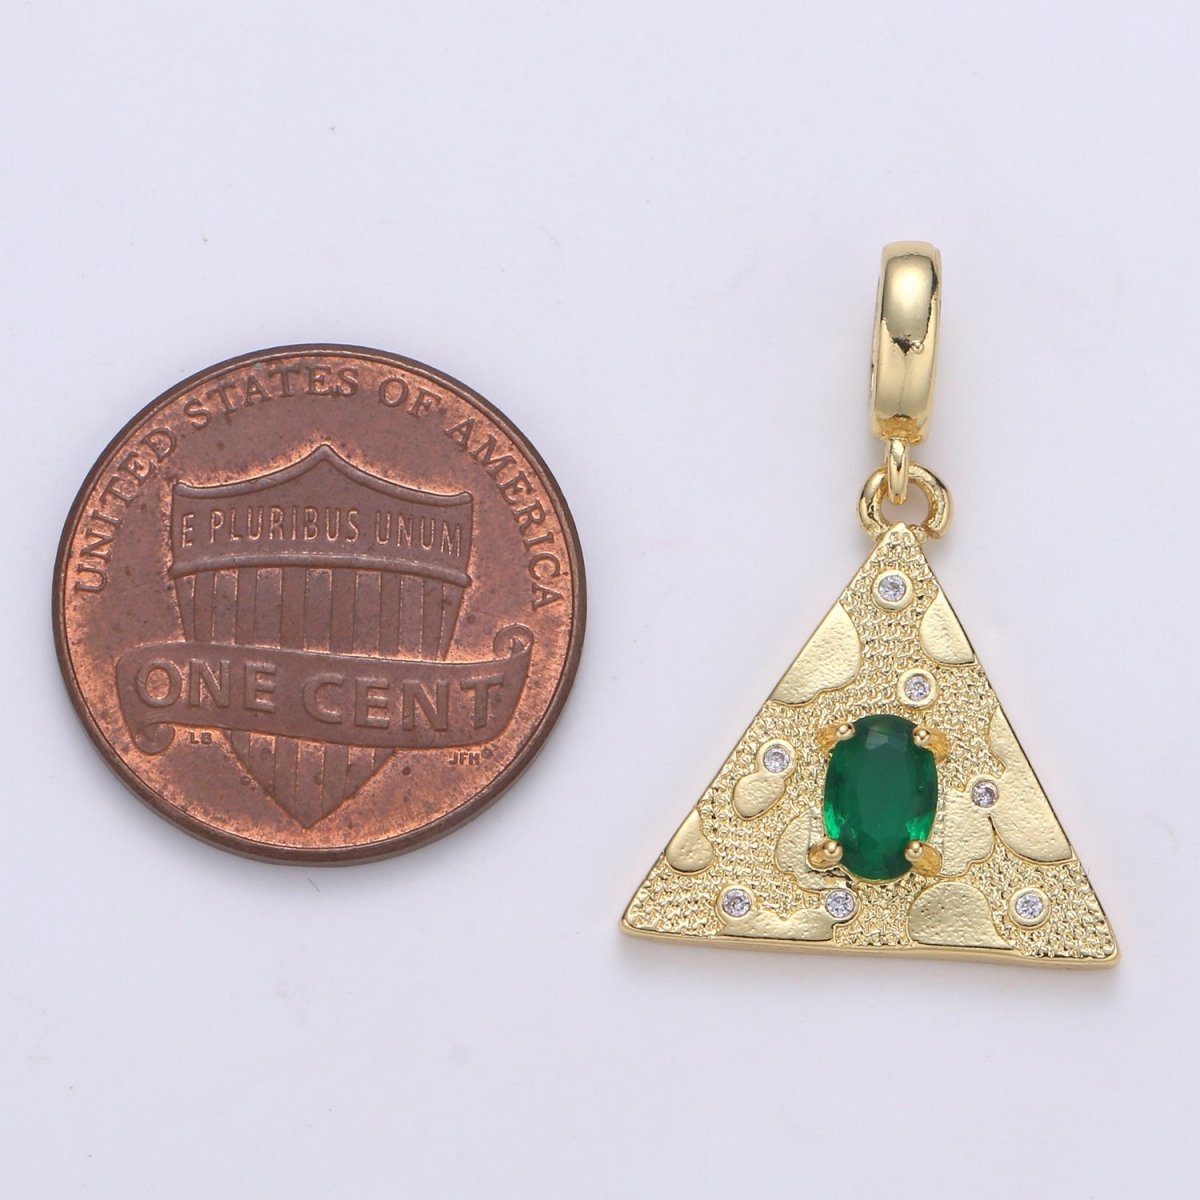 Emerald Cubic Zirconia Charms Pendants-Topo Garden CZ 24K Gold Medieval Charm, Triangle Pendant Necklace Bracelet Supply H-255 H-258 - DLUXCA